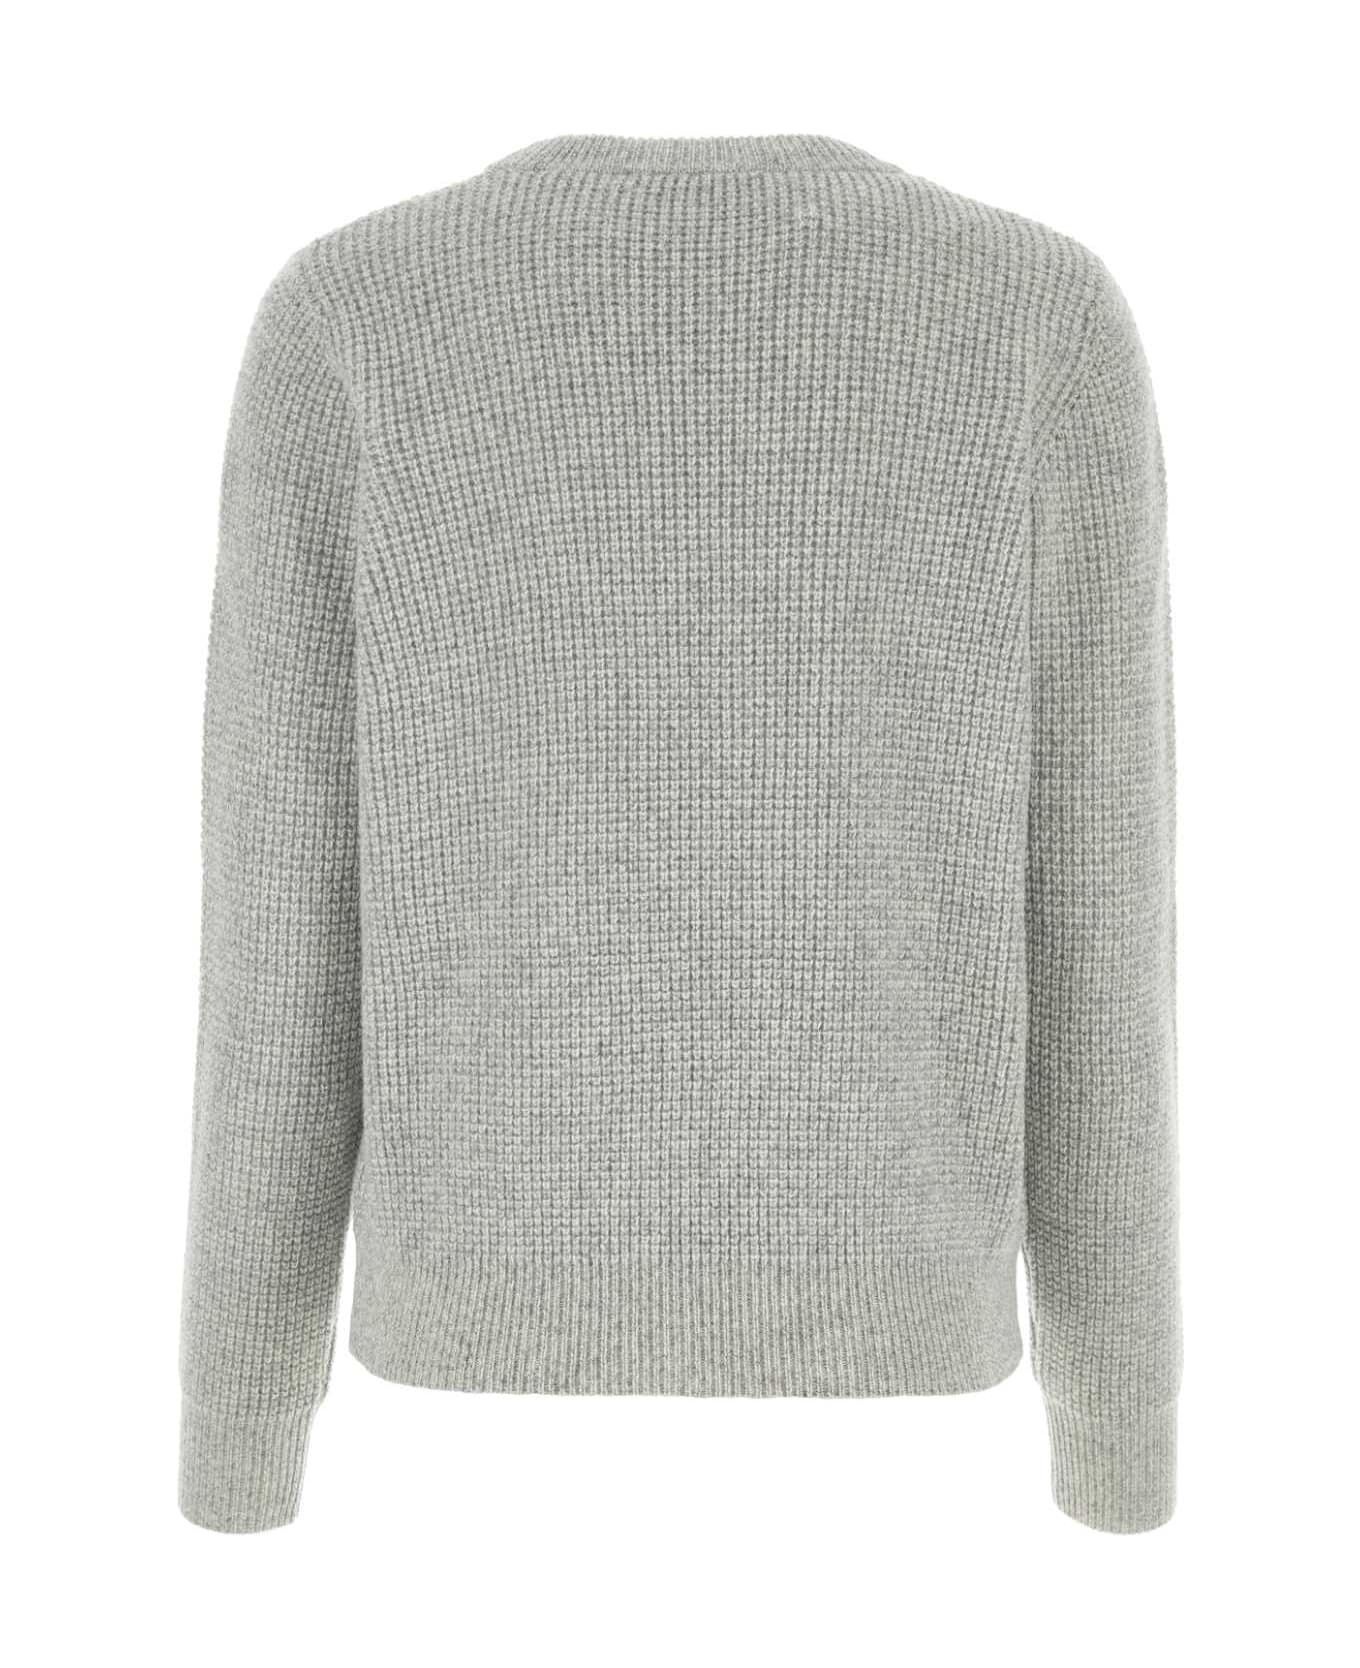 Maison Kitsuné Light Grey Wool Sweater - LIGHT GREY MELANGE